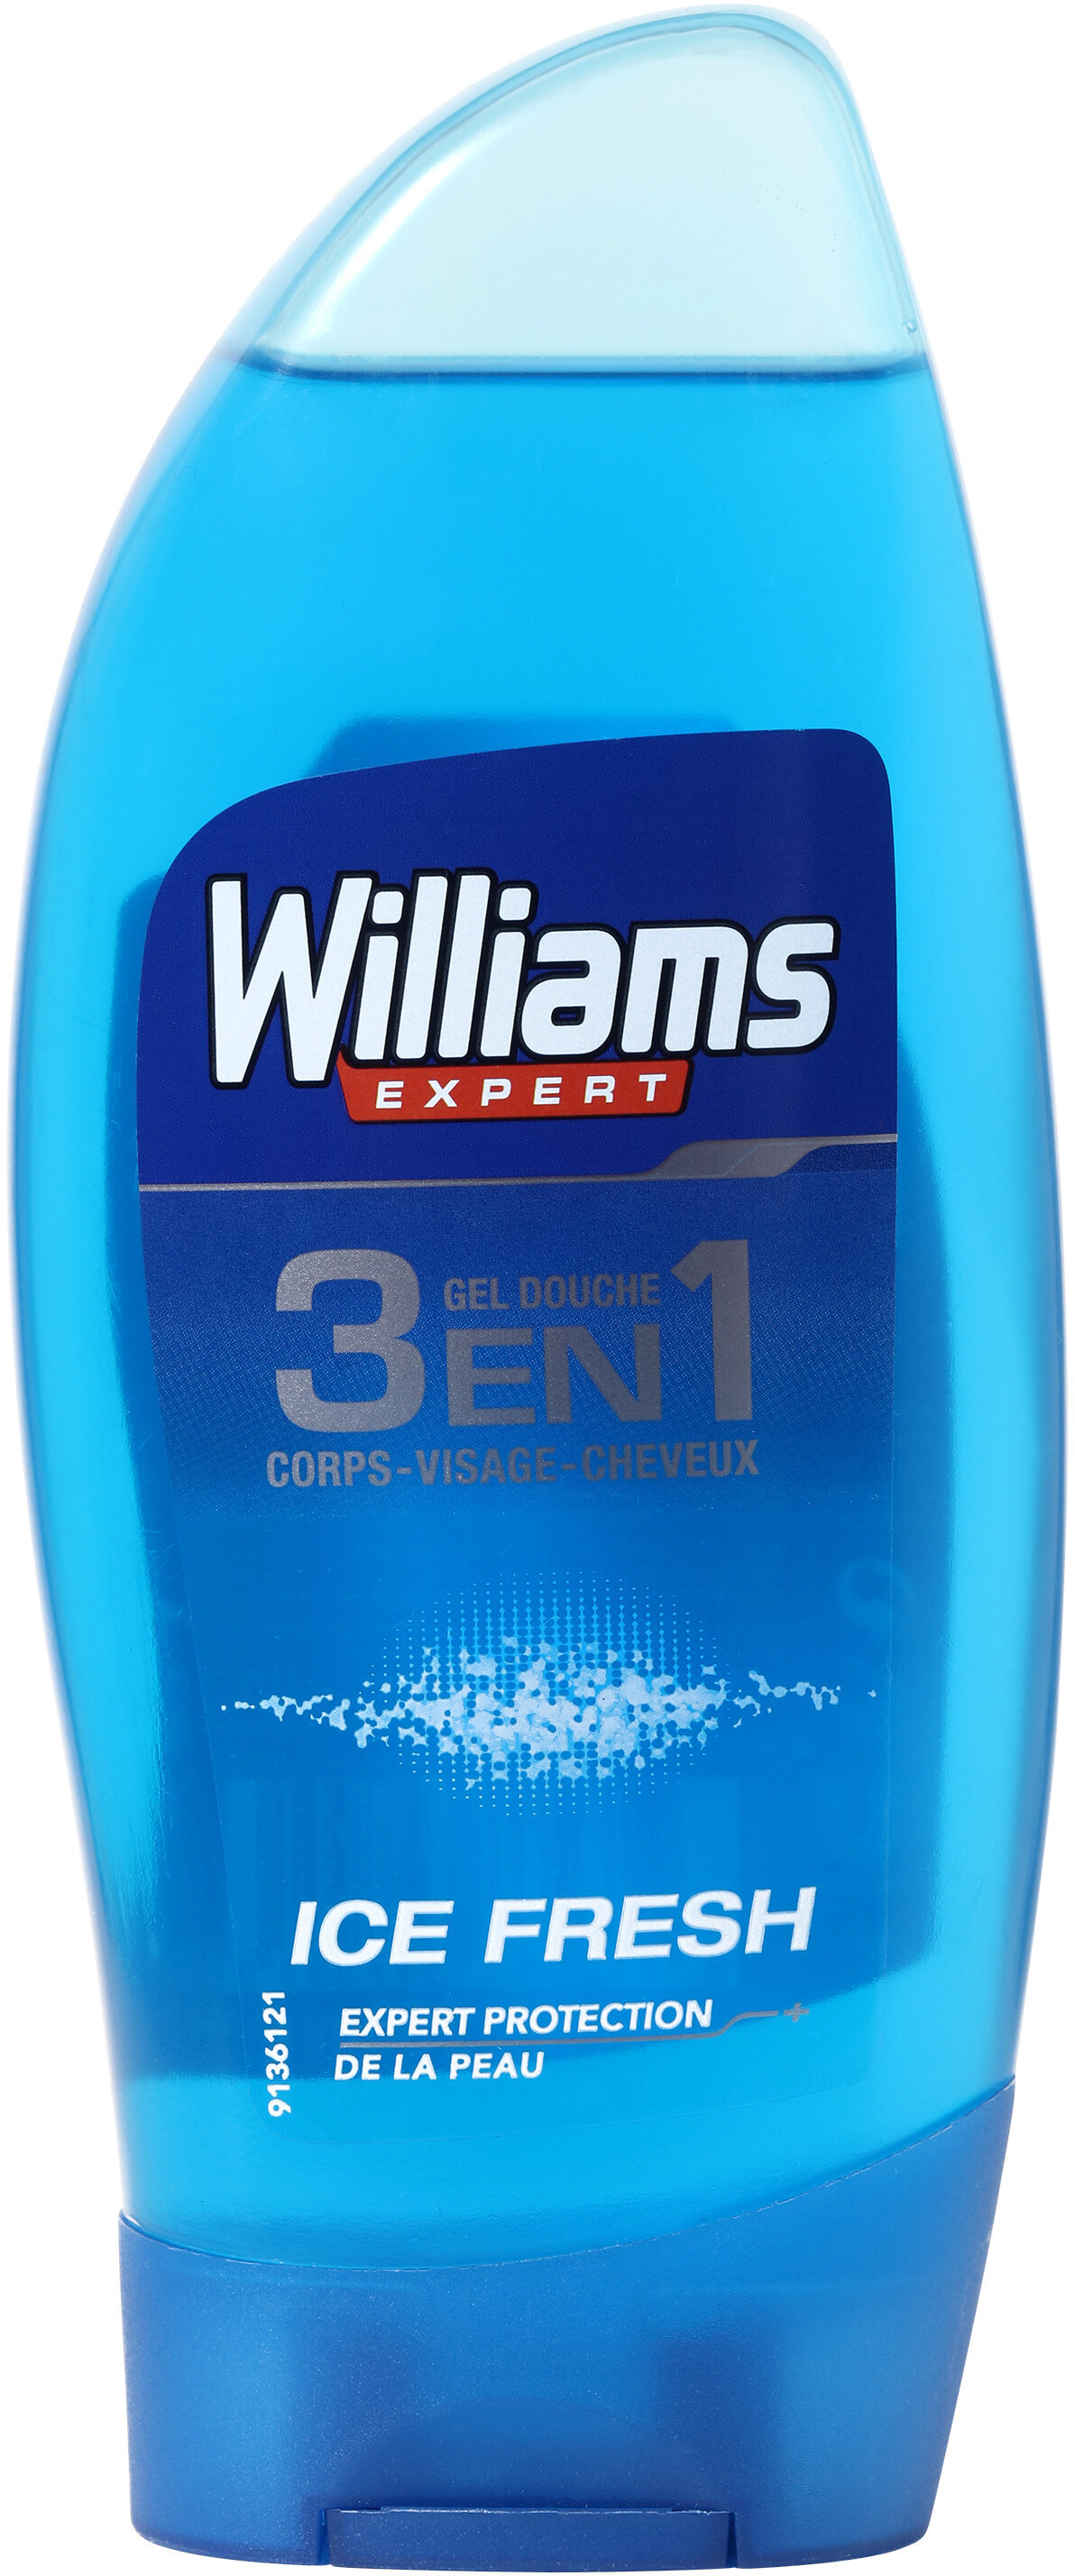 Williams Gel Douche Homme 3 en 1 Ice Fresh - Product - fr